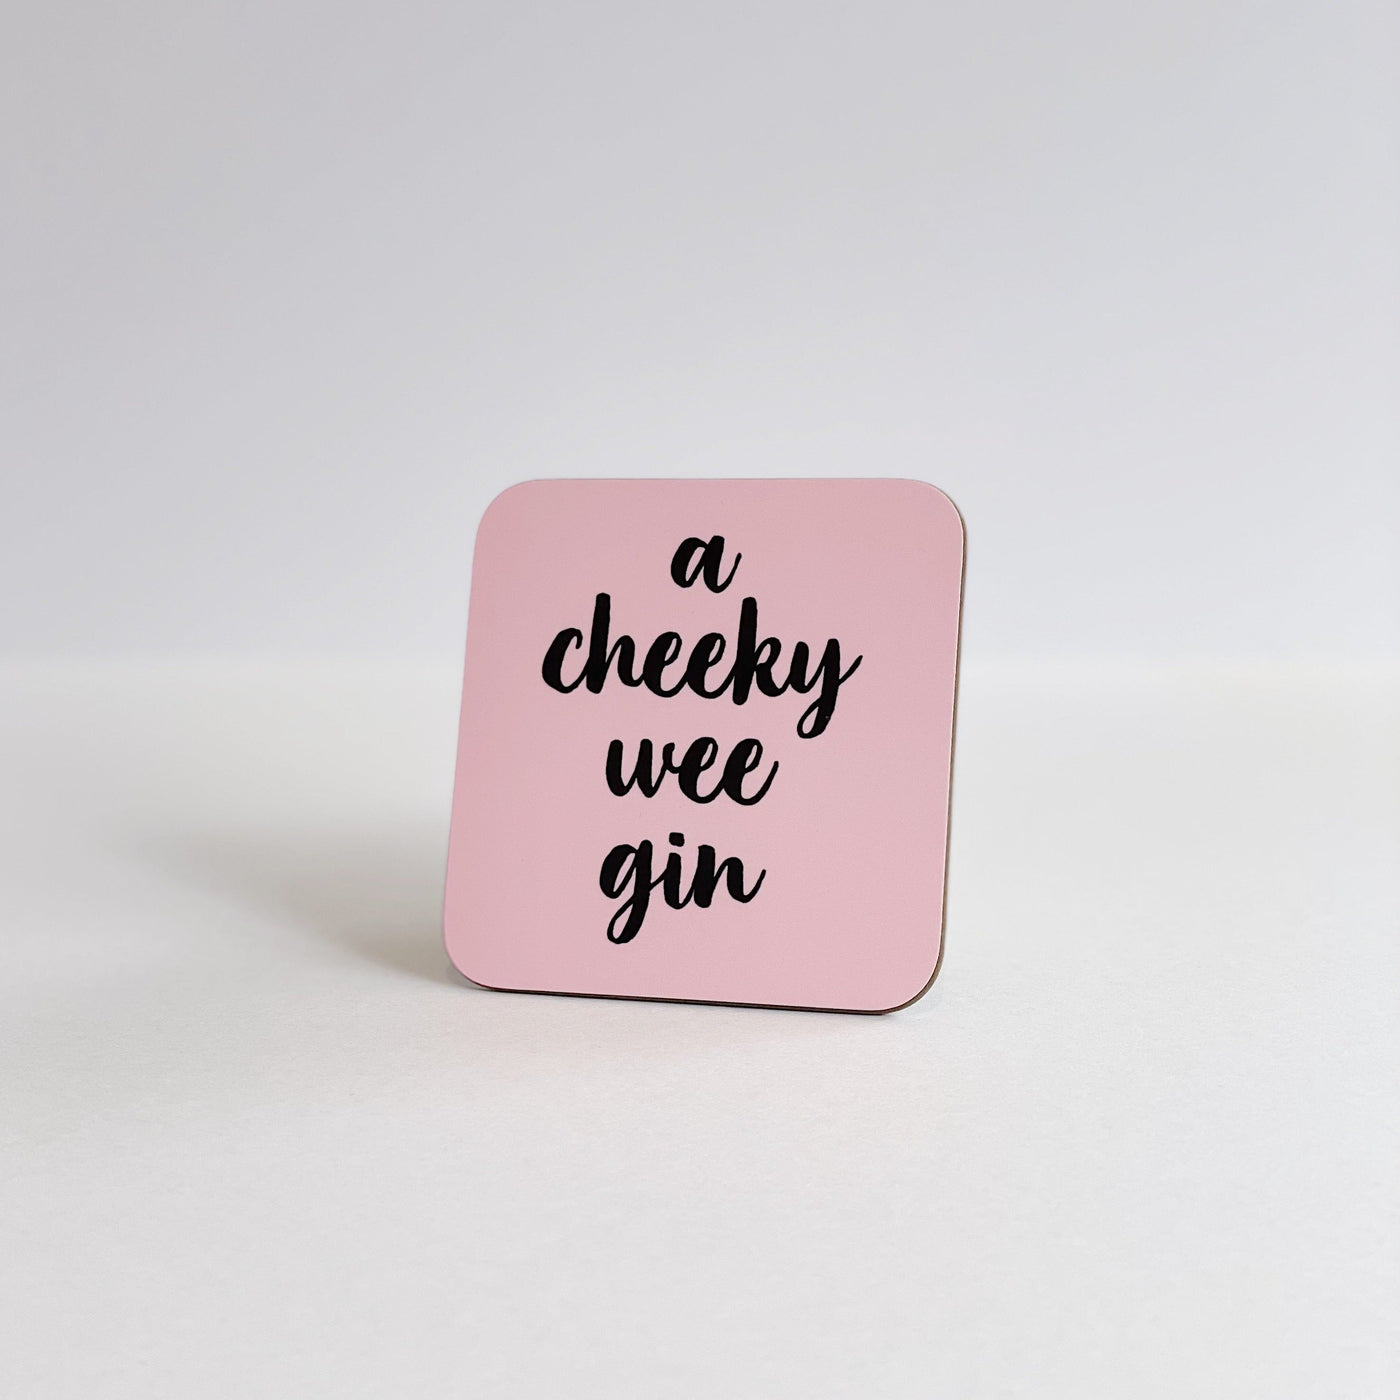 a cheeky wee gin coaster pink